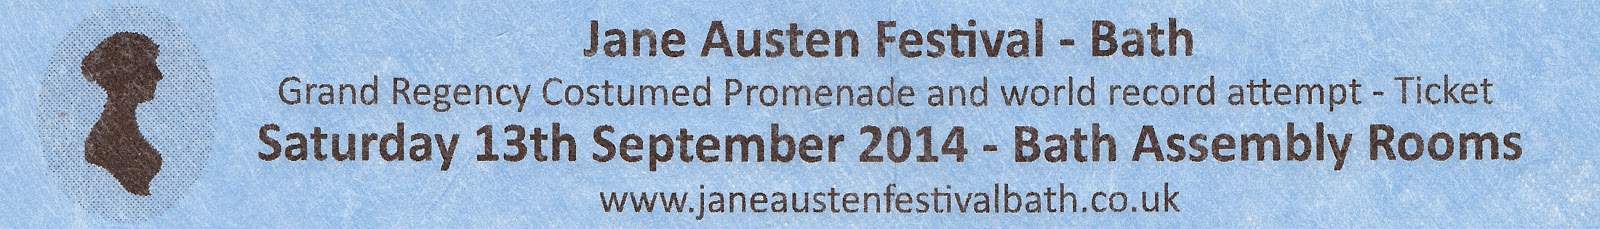 Ticket for the Jane Austen Festival Grand Regency Costumed Promenade